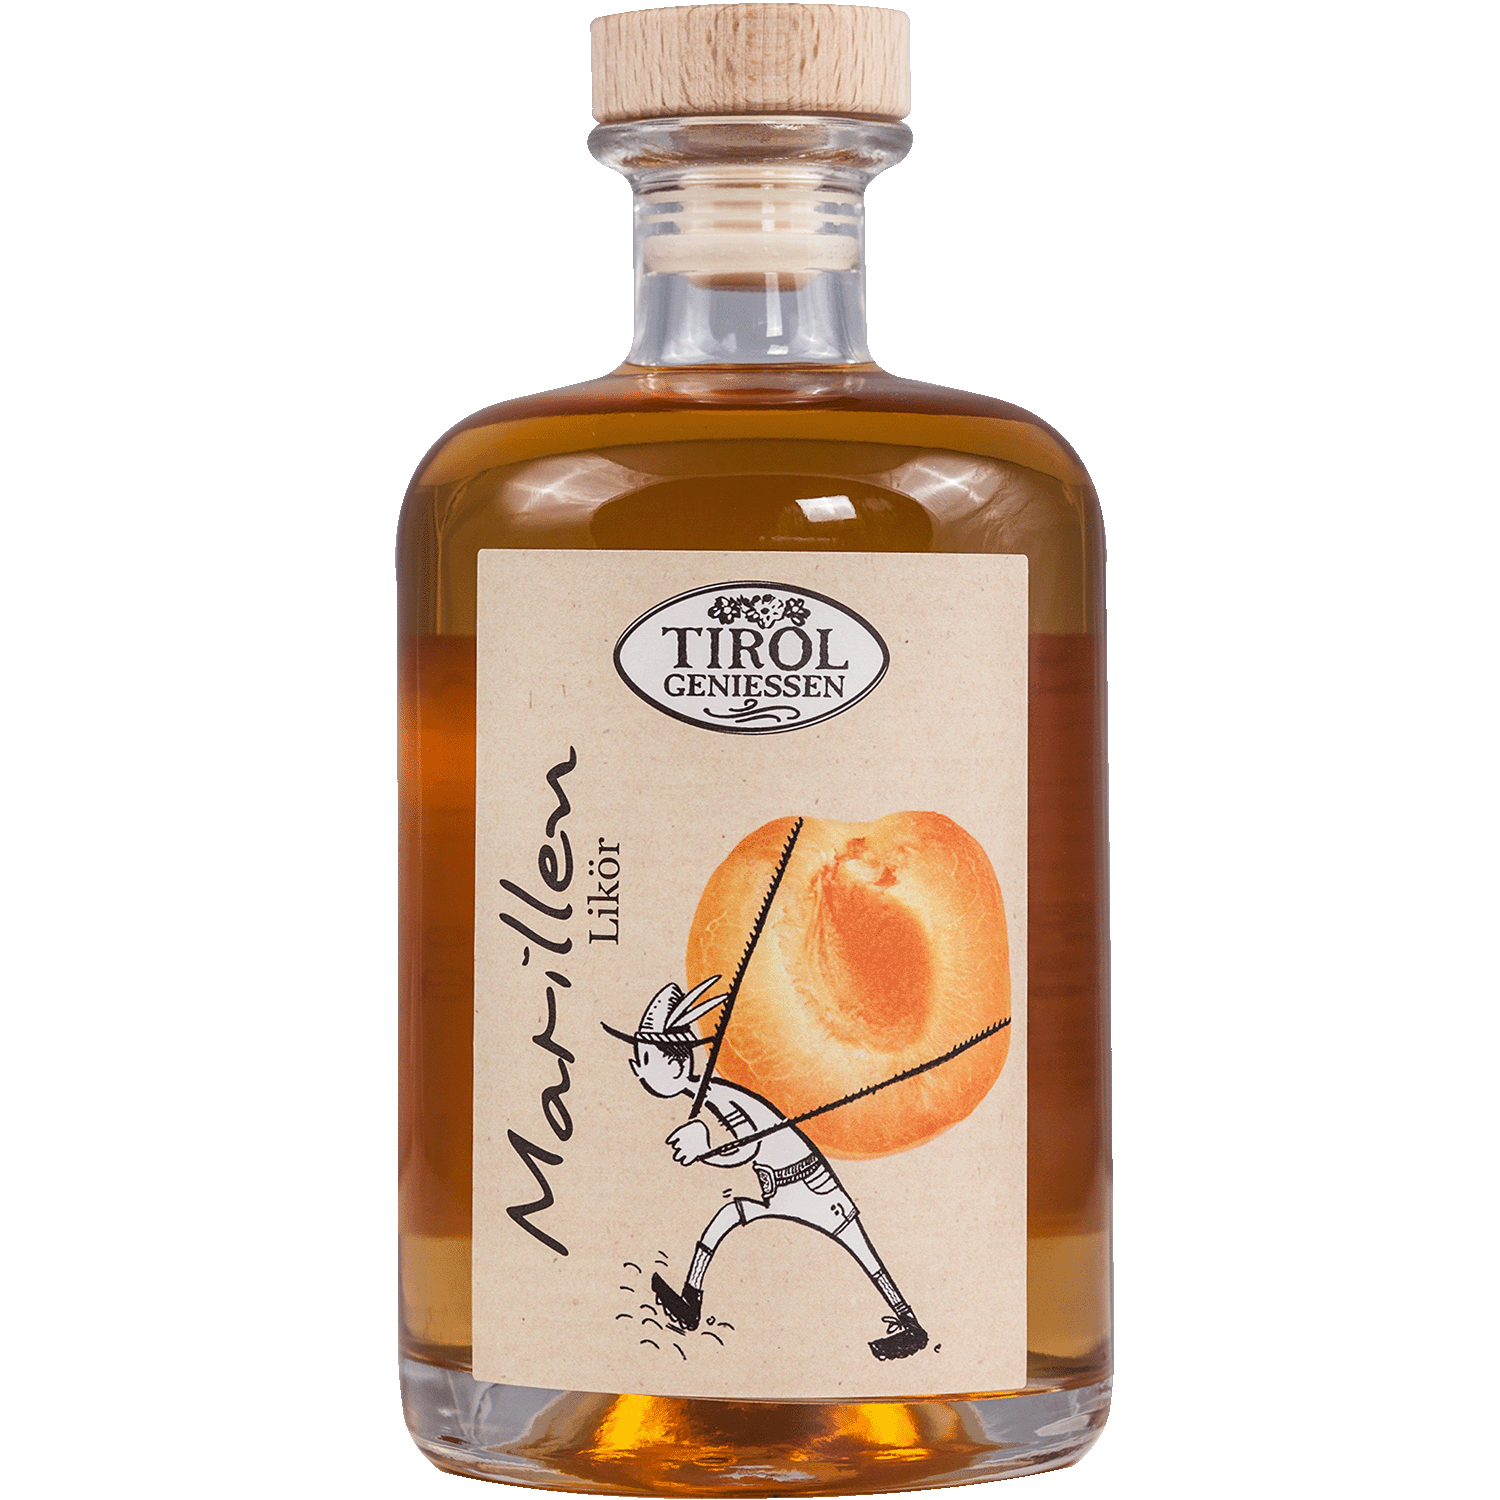 Tyrolean Apricot Liqueur in gift bottle from Austria from Tirol Geniessen